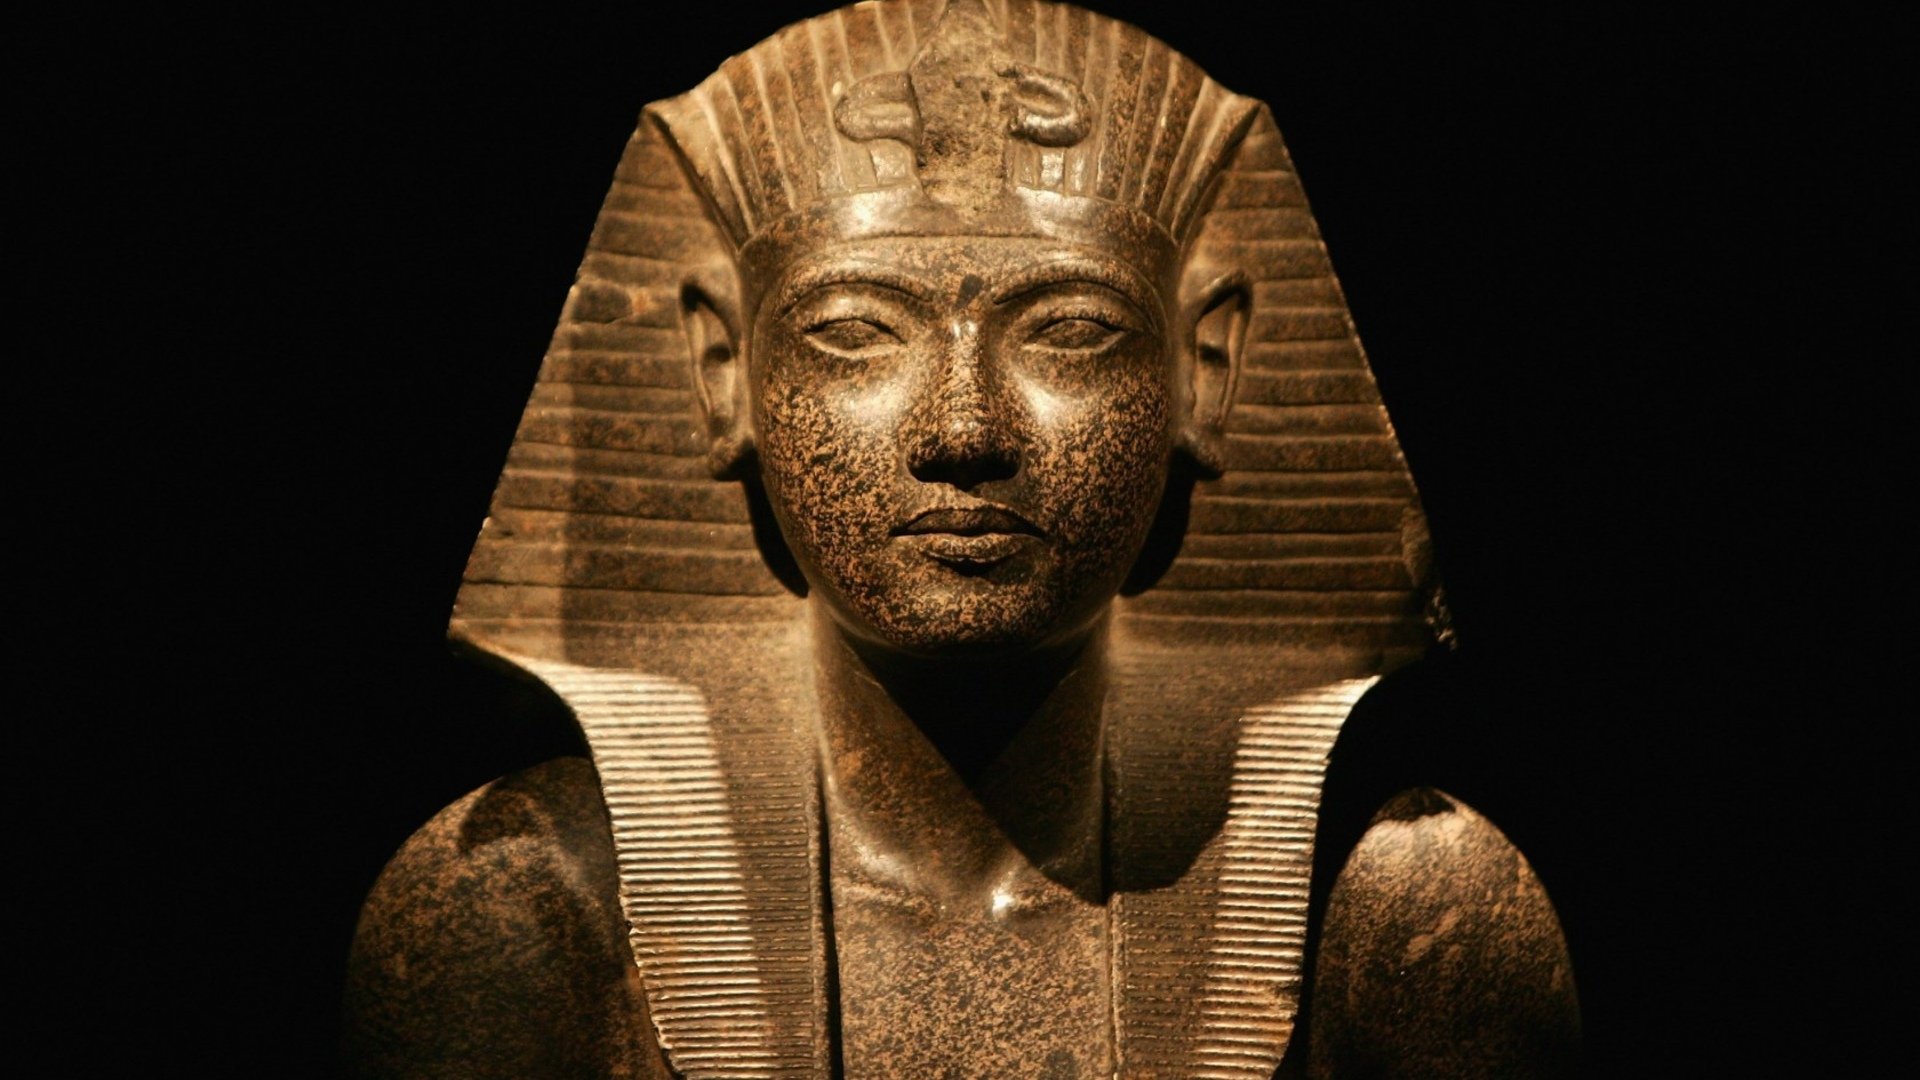 43+] Egyptian Pharaoh Wallpaper - WallpaperSafari